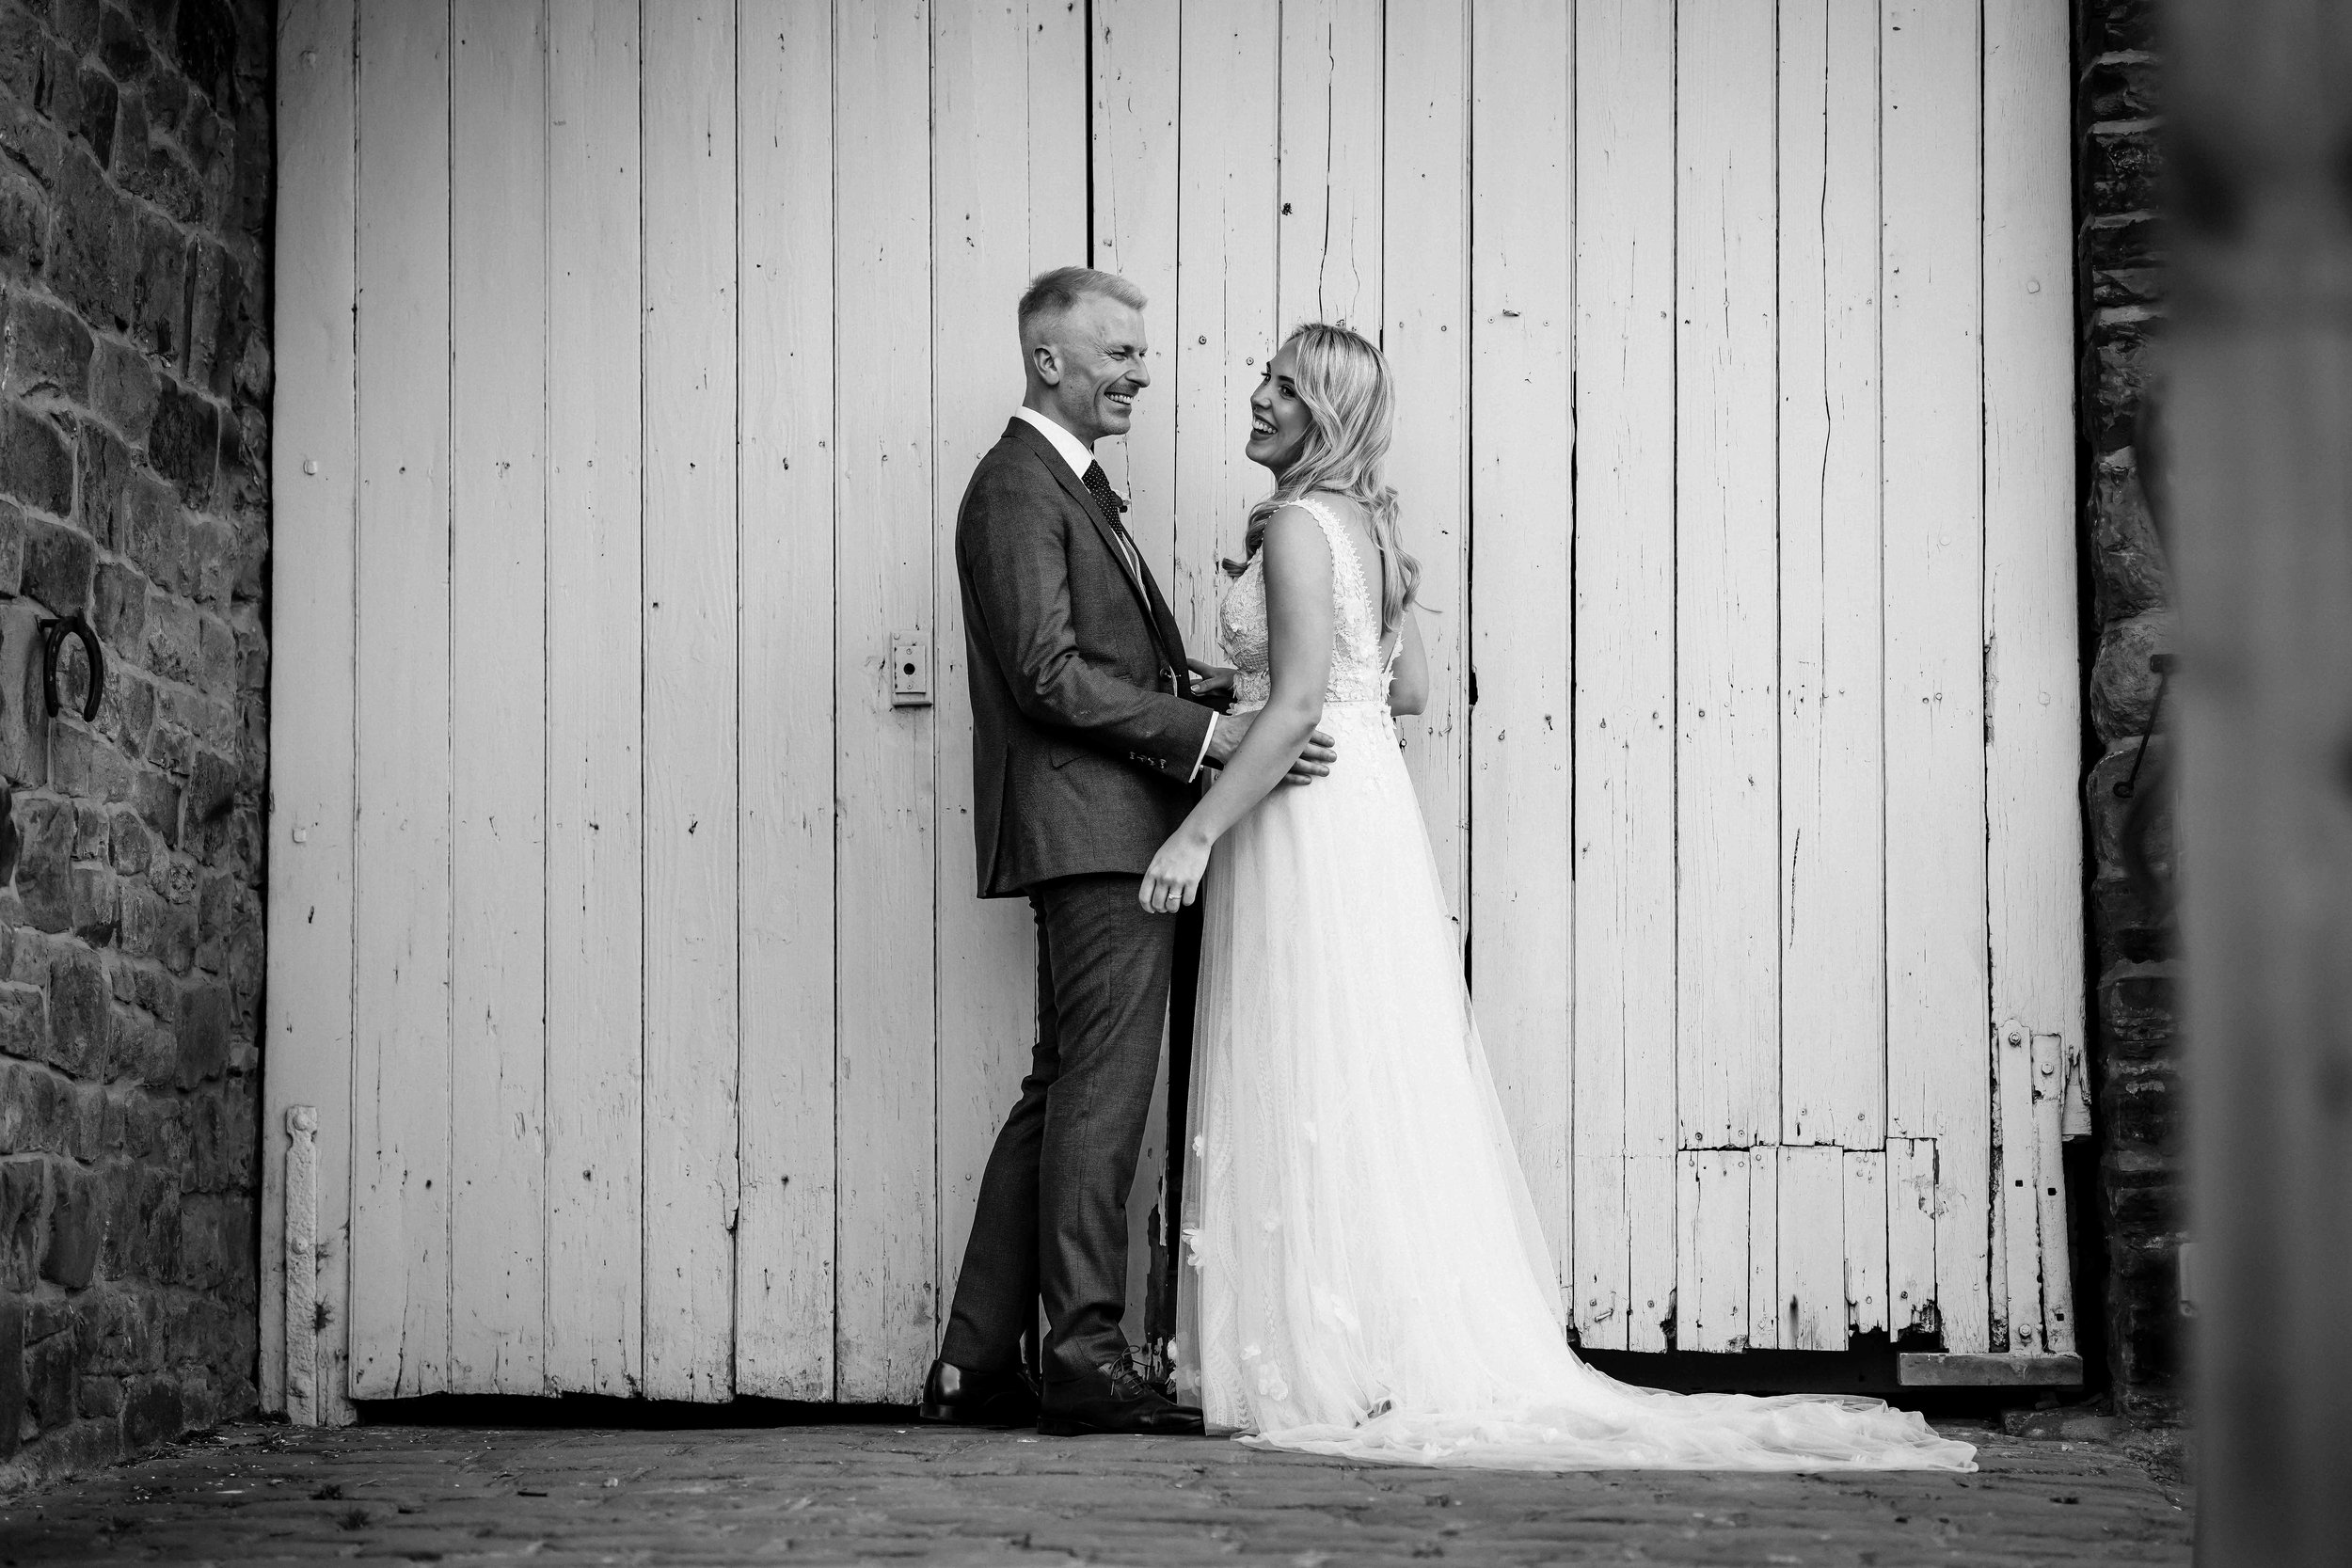 Bashall Barn Clitheroe Wedding Photographer Lancashire - 047.jpg